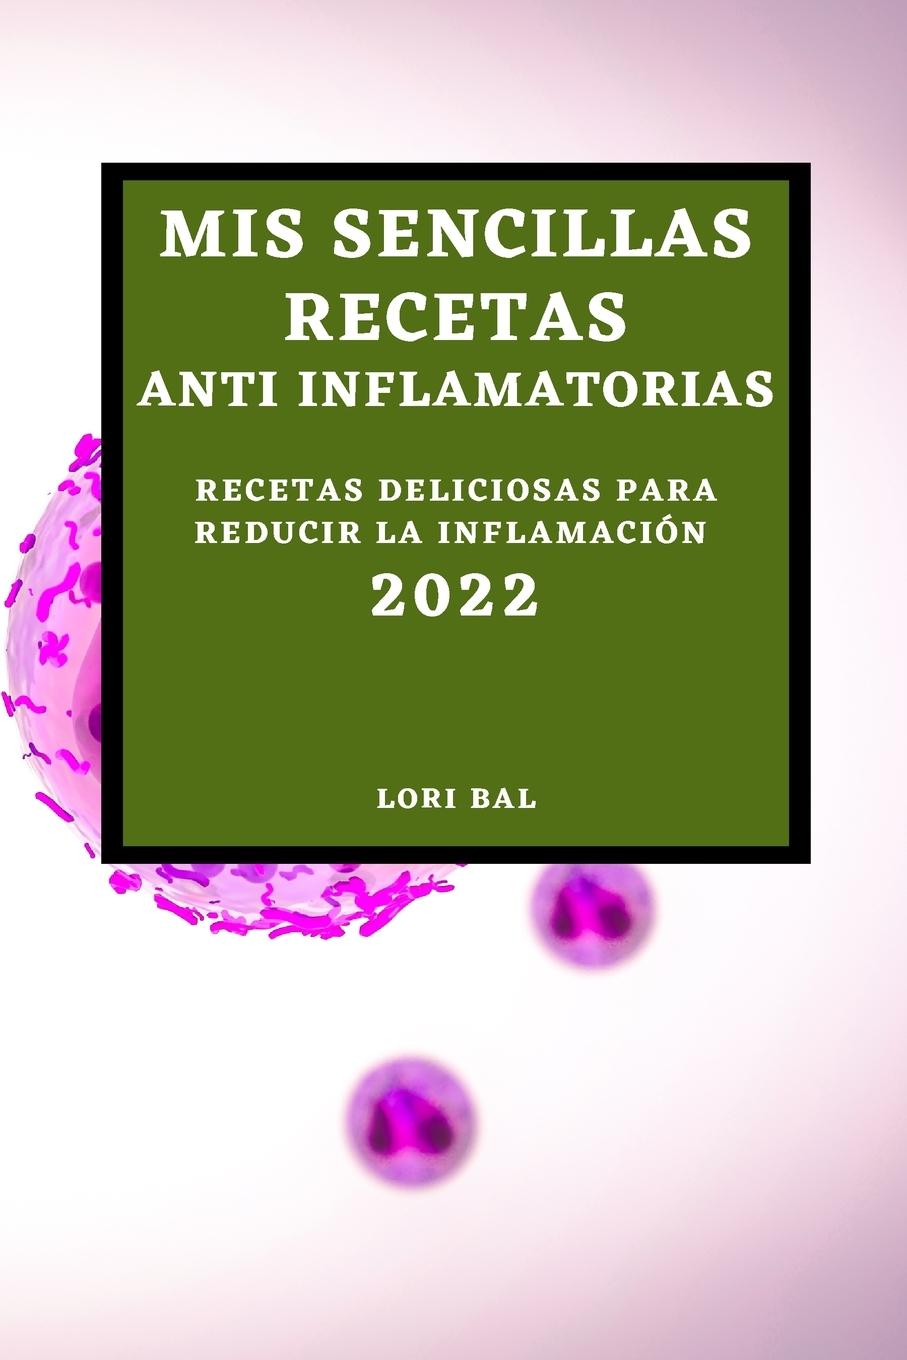 Carte MIS Sencillas Recetas Anti Inflamatorias 2022 